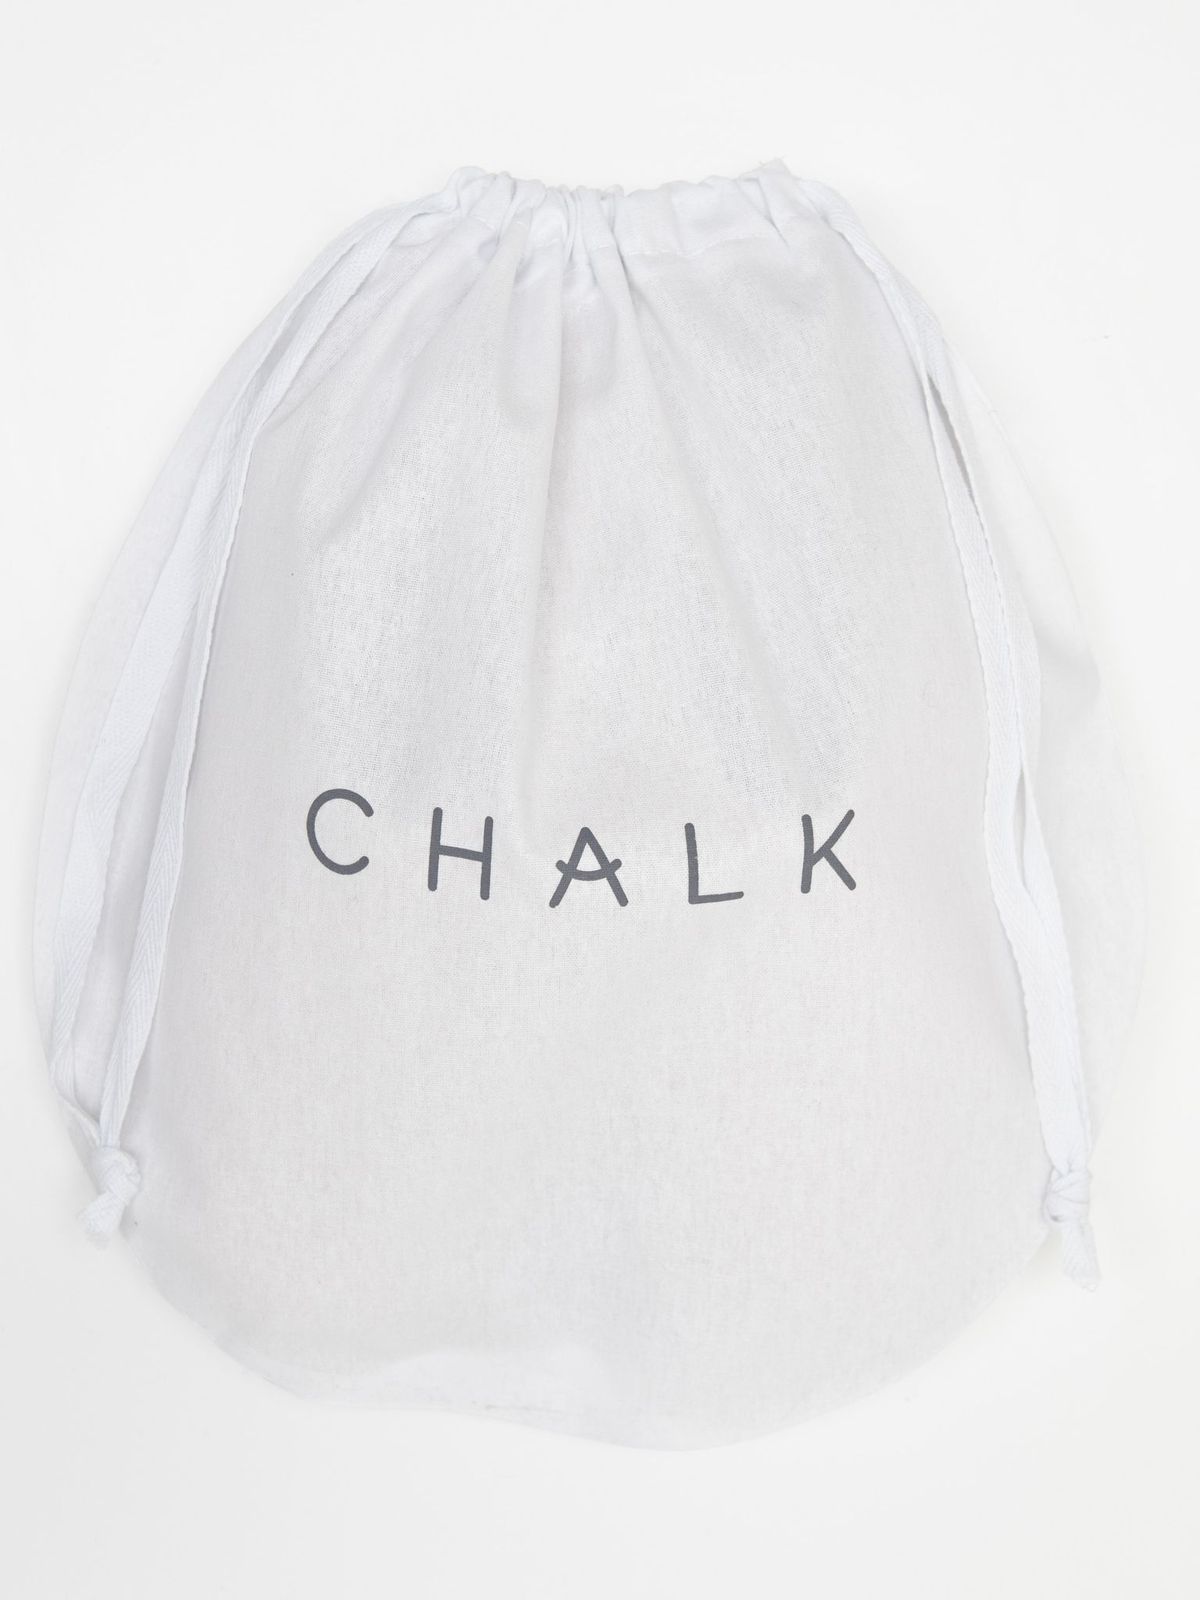 Chalk Bella Slippers - Charcoal M/L Chalk The White Room